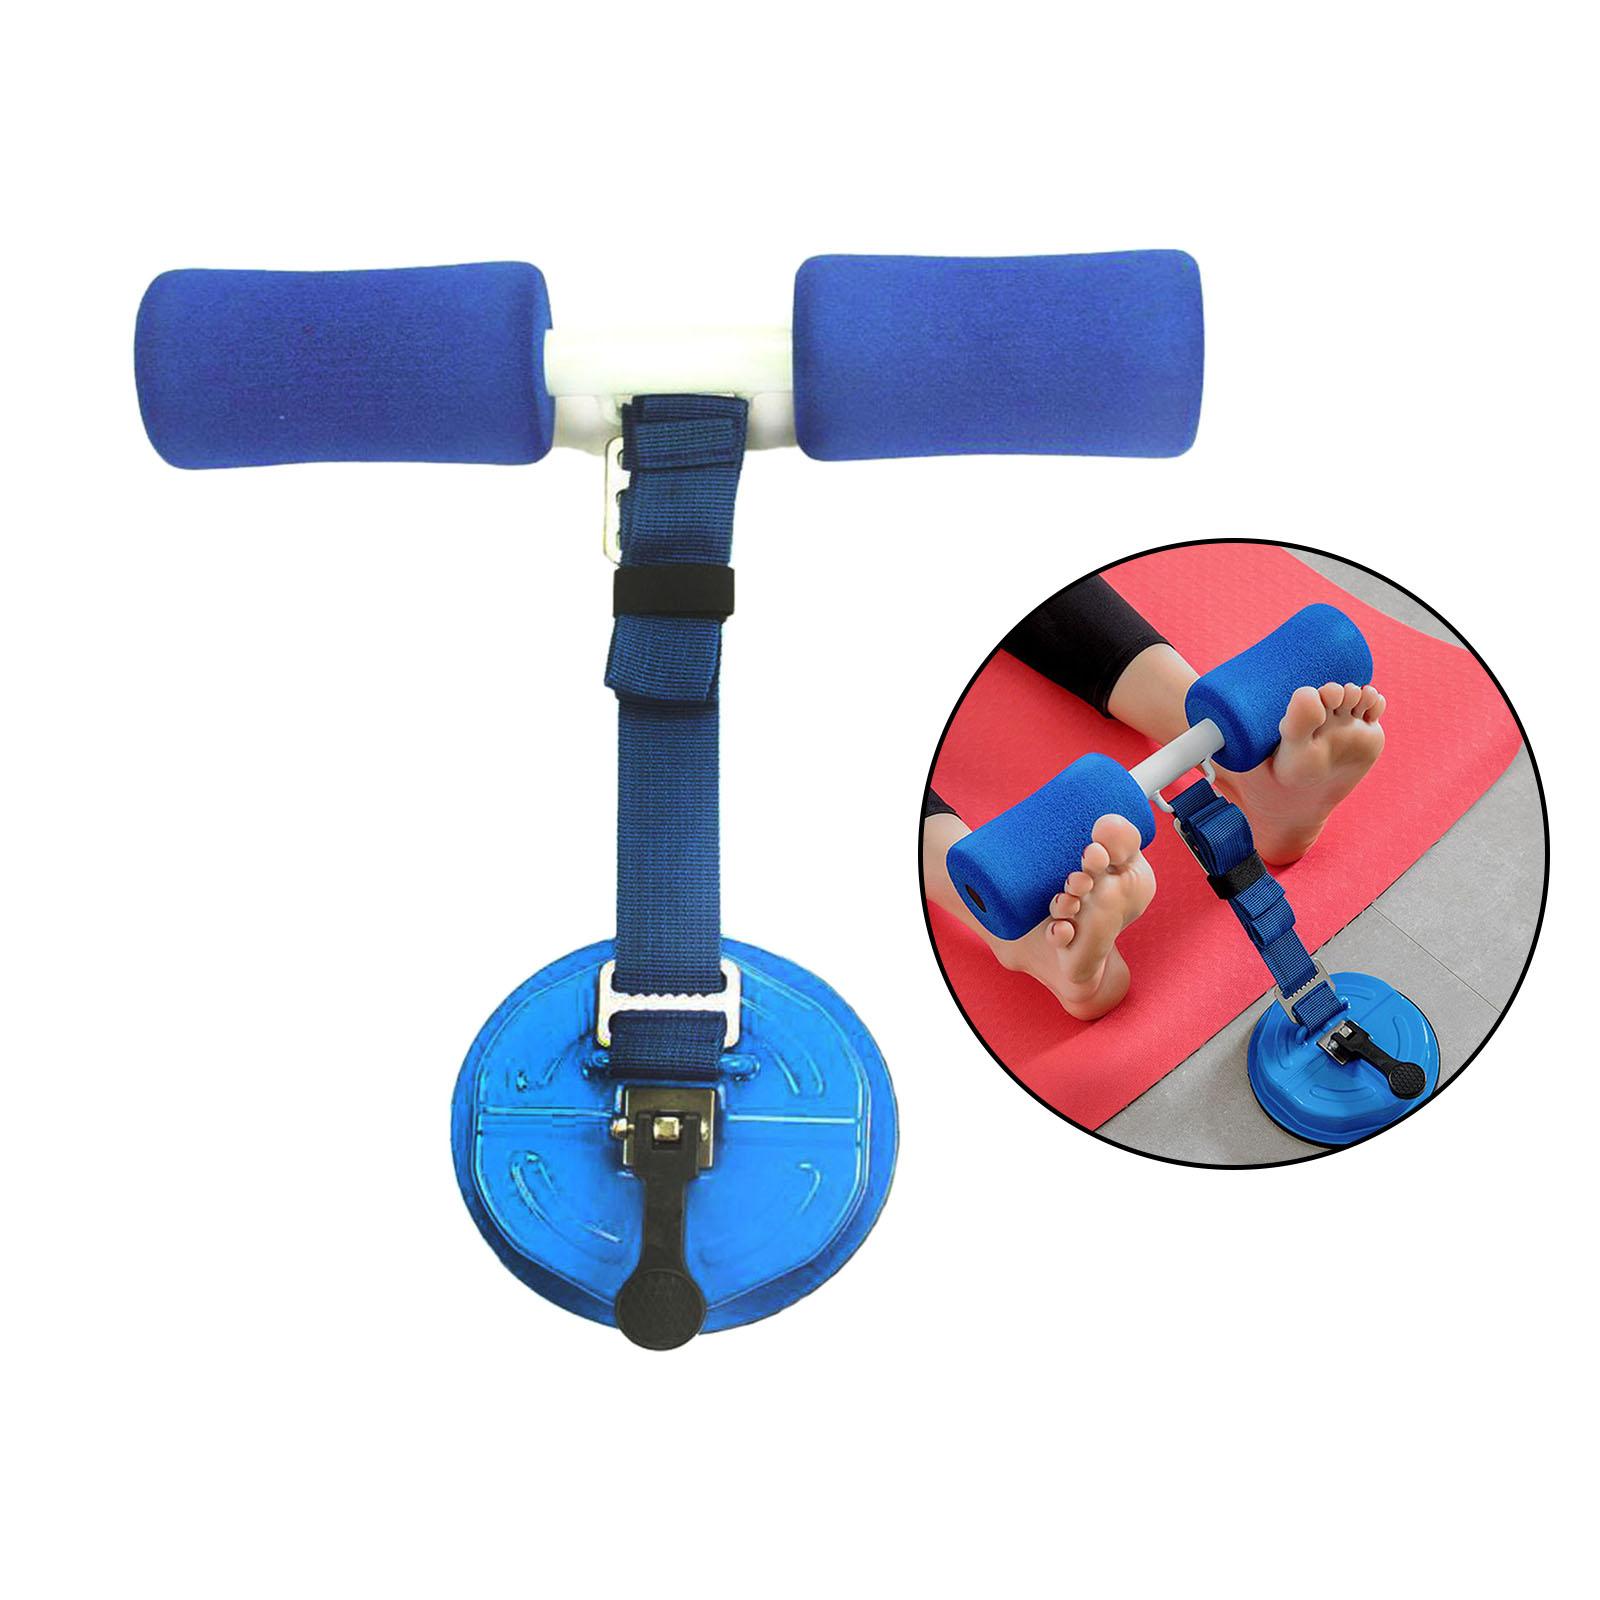 Sit-Up Assist Hip Bridge Fitness Device with Adjustable Belt for Yoga